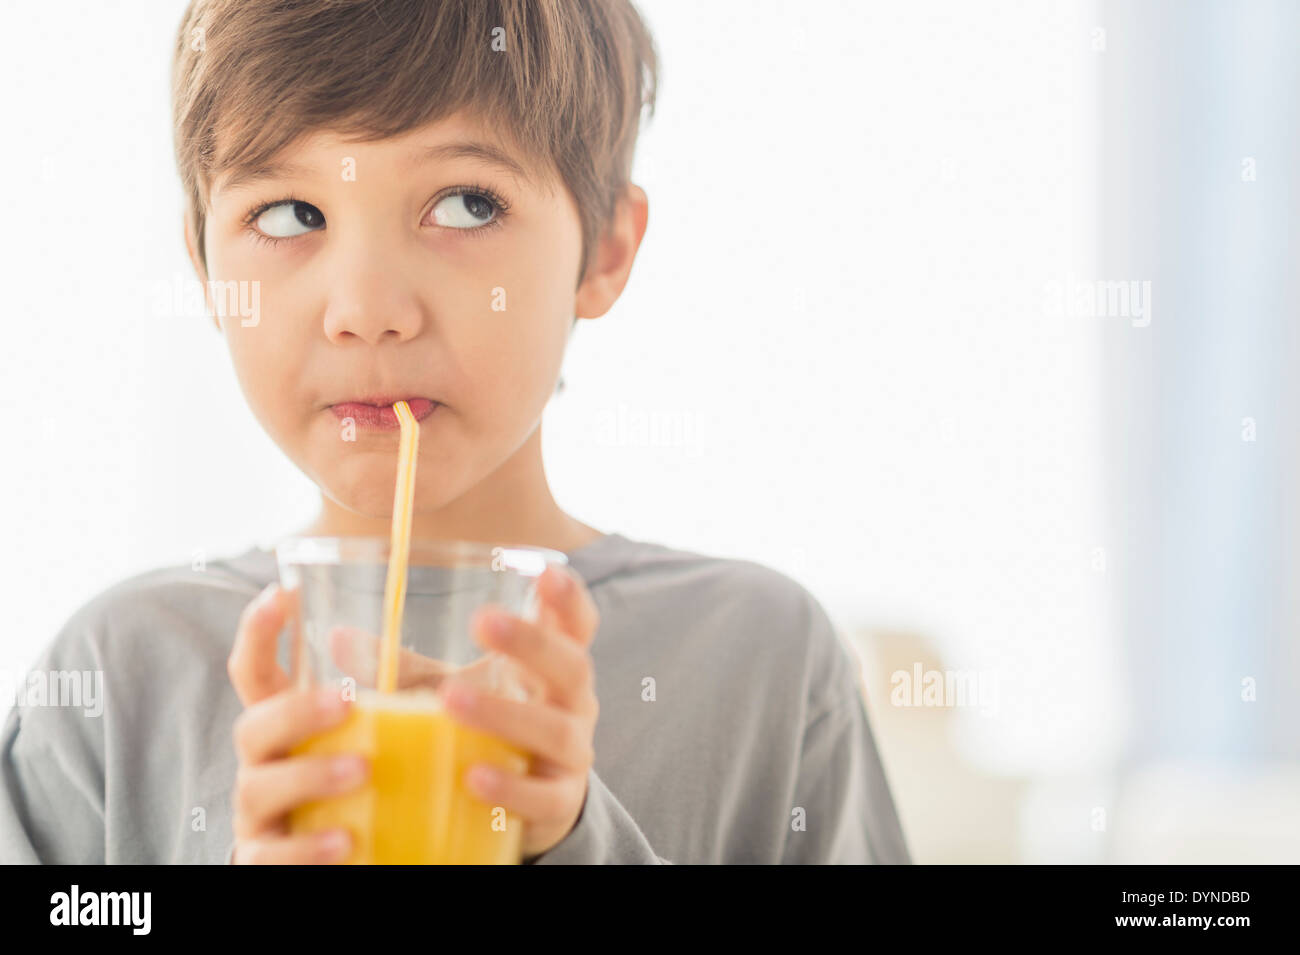 Hispanic boy drinking juice with straw Stock Photo